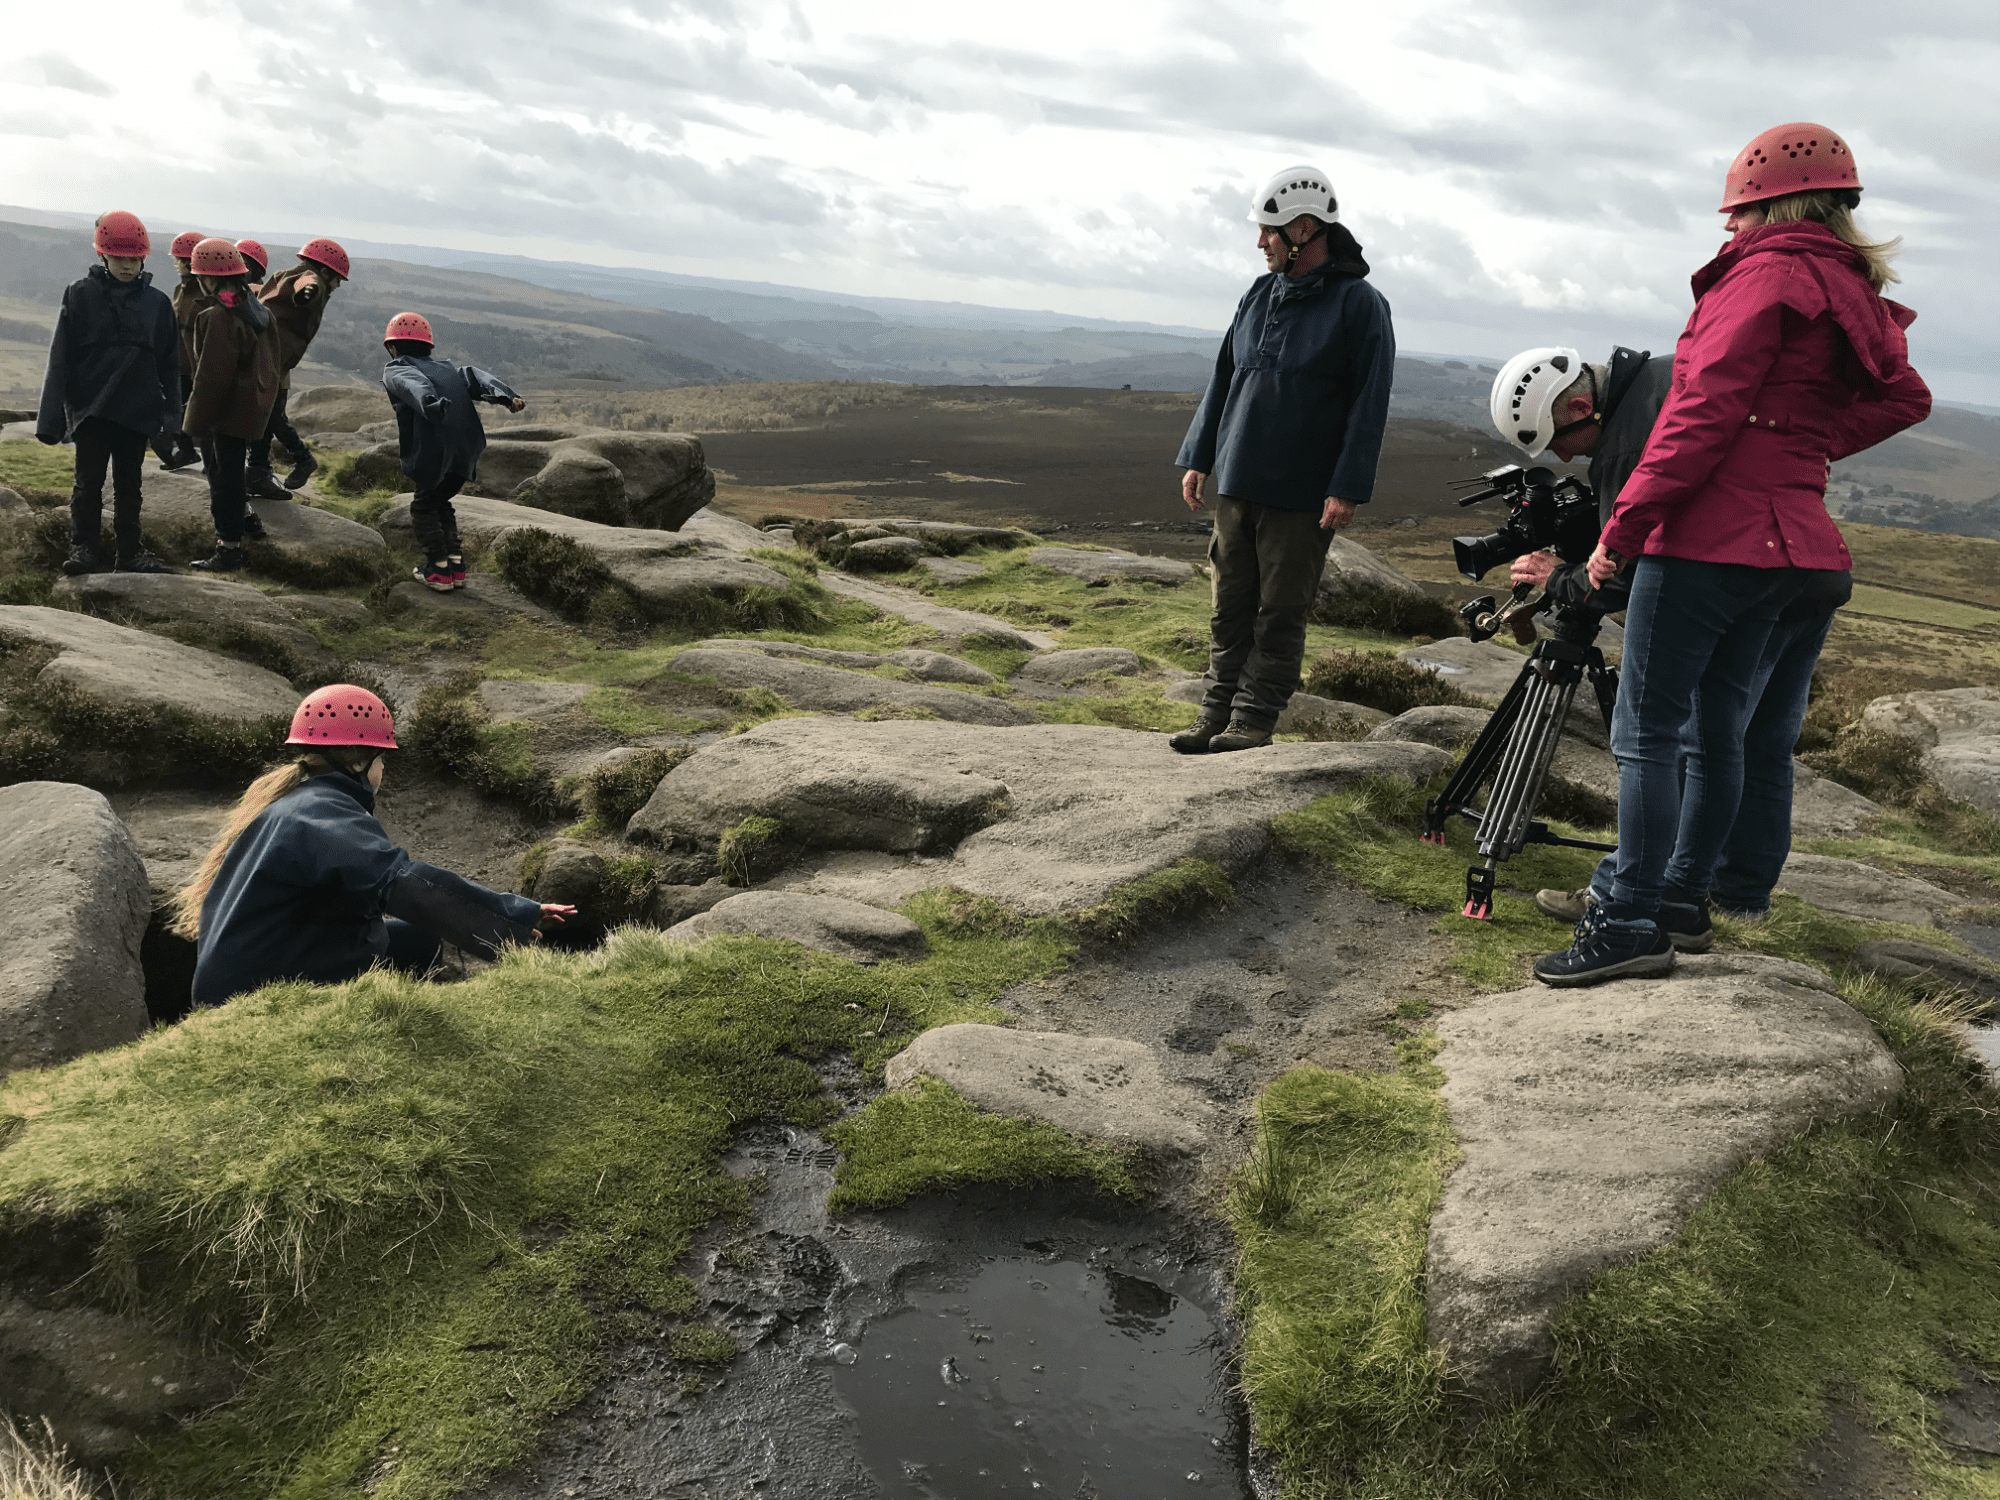 Filming on rocks